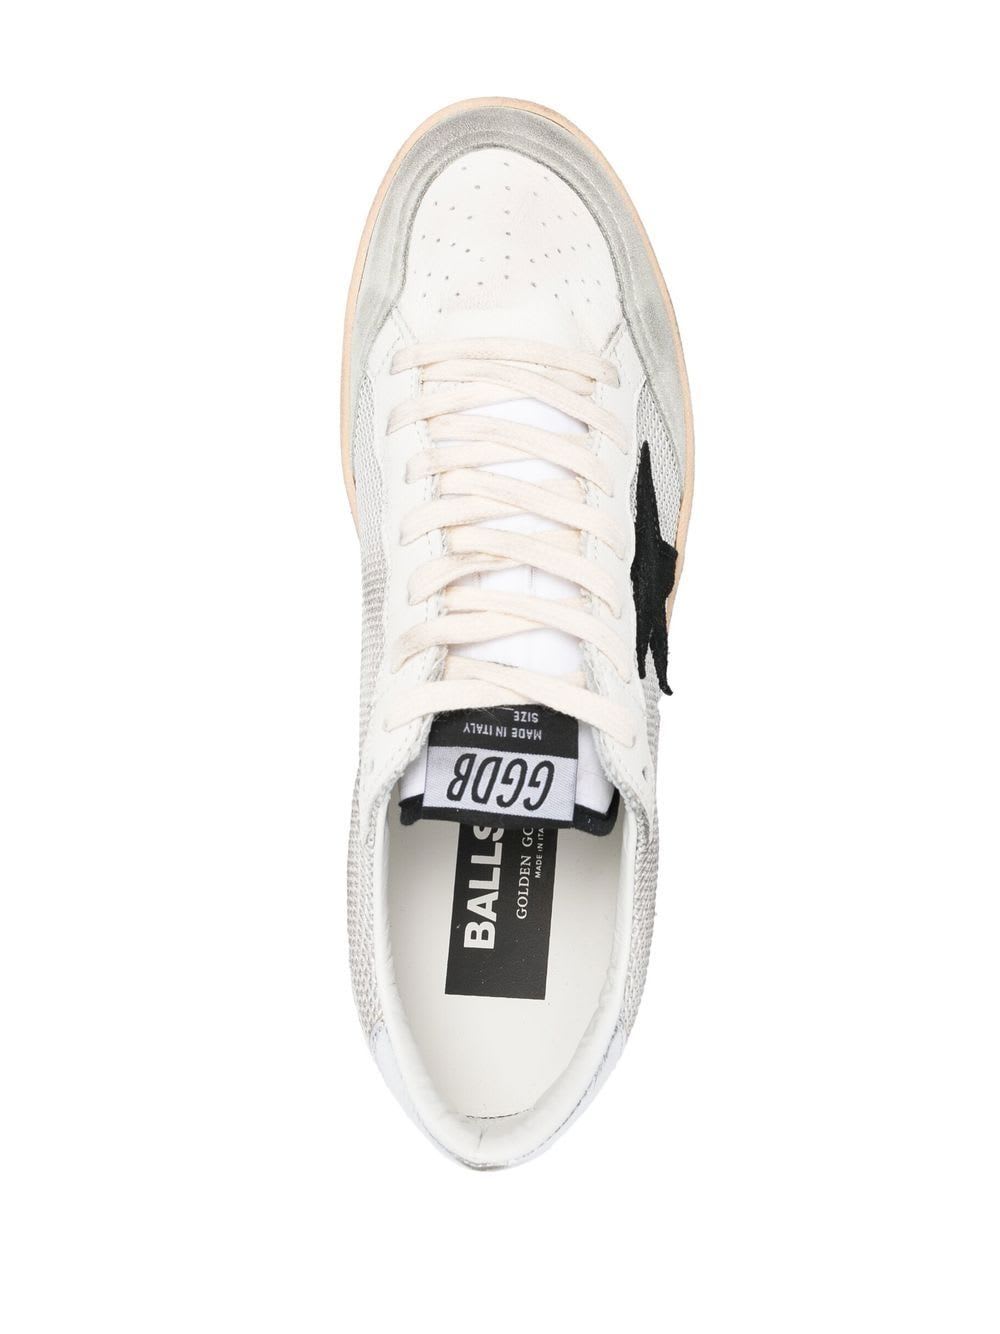 Shop Golden Goose Ball Star Sneakers In Light Silver Black White Silver